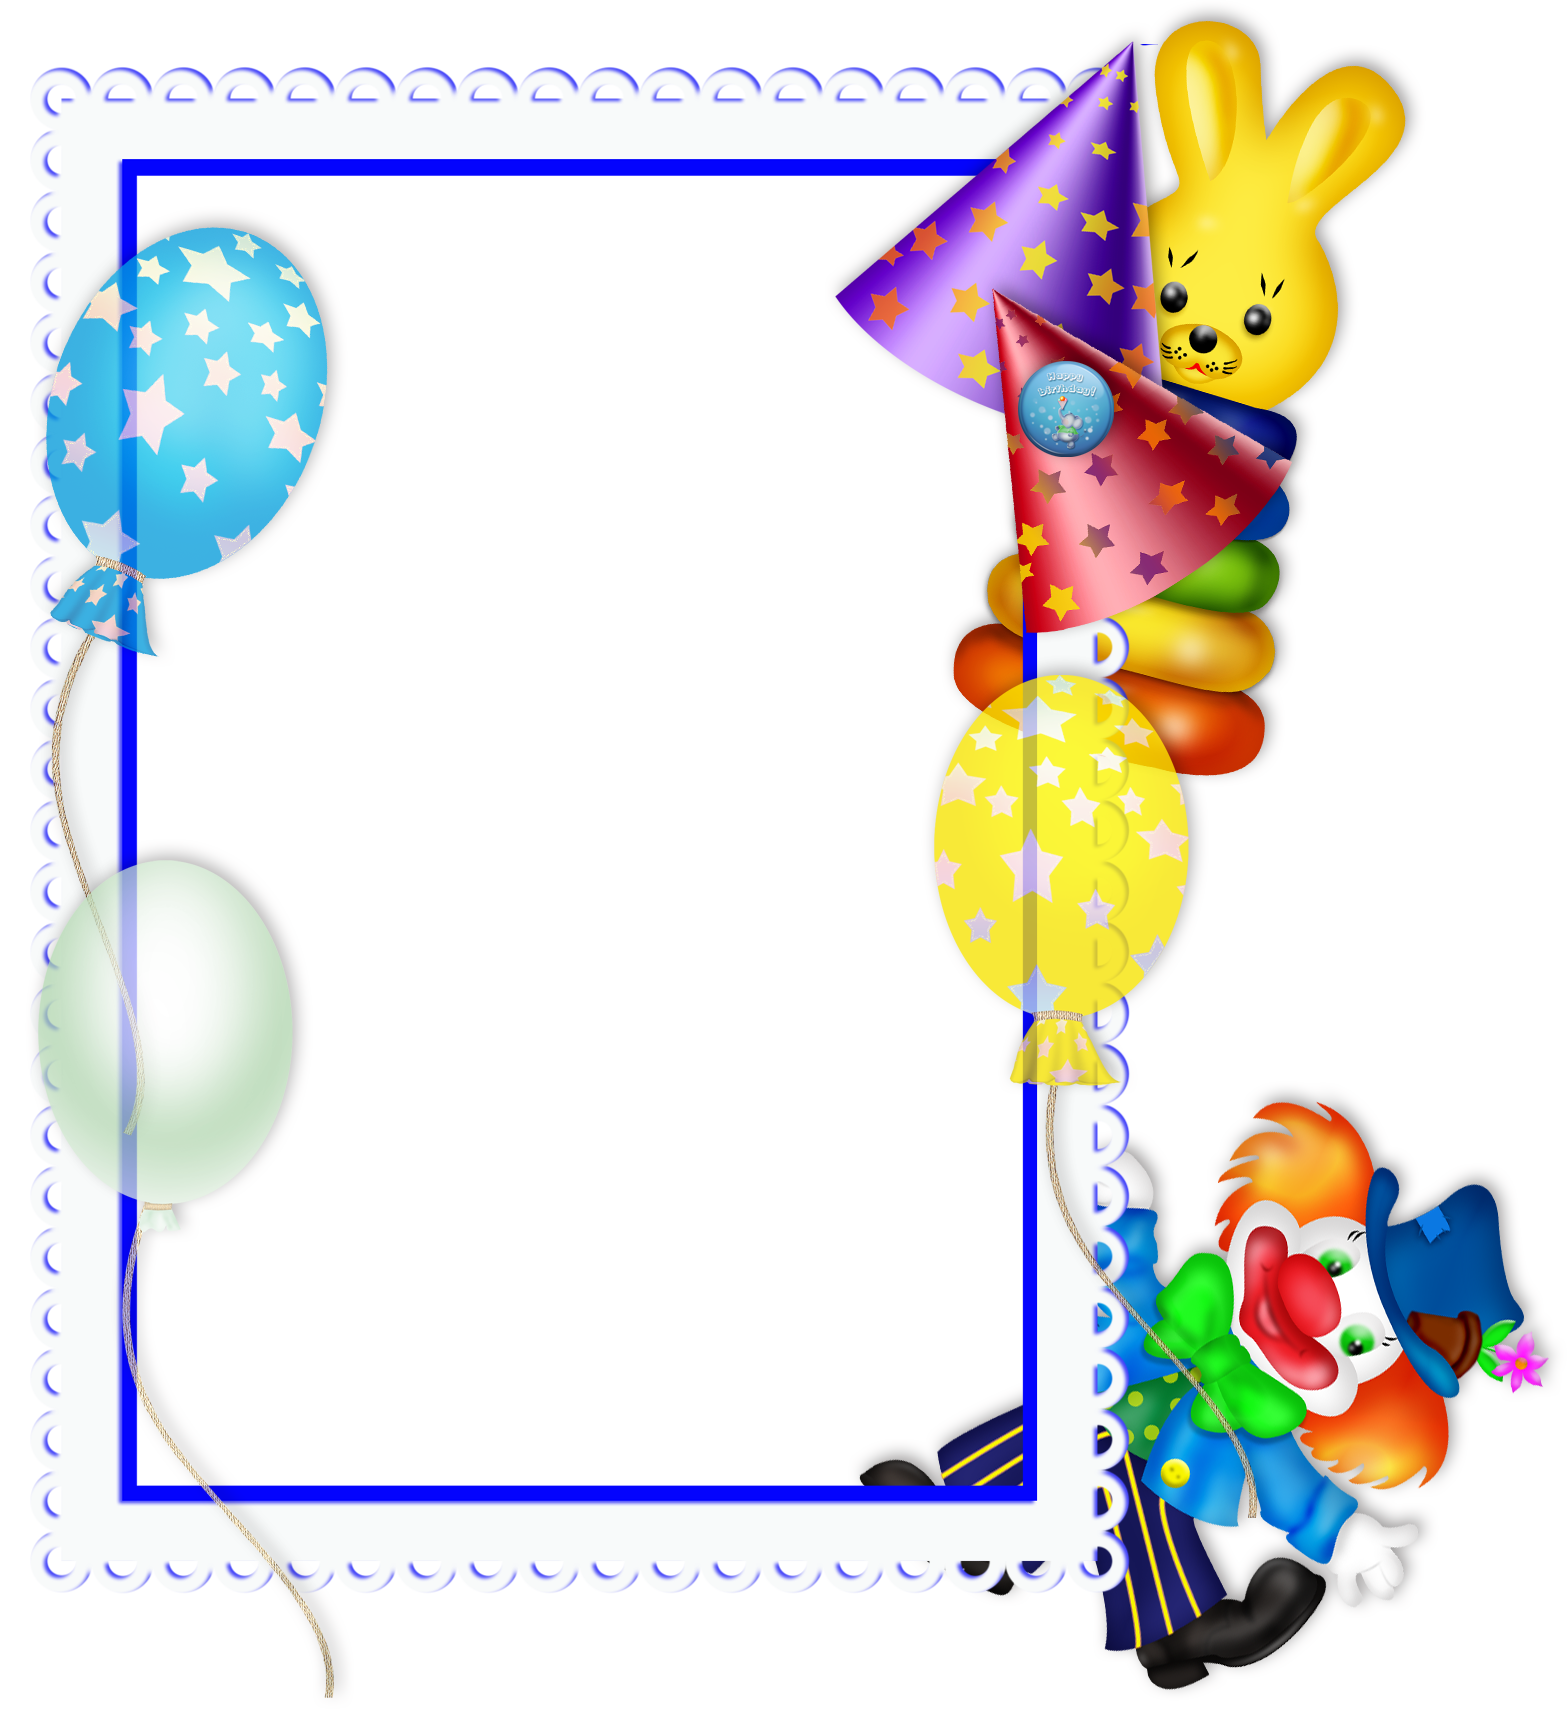 Birthday Frame PNG Image